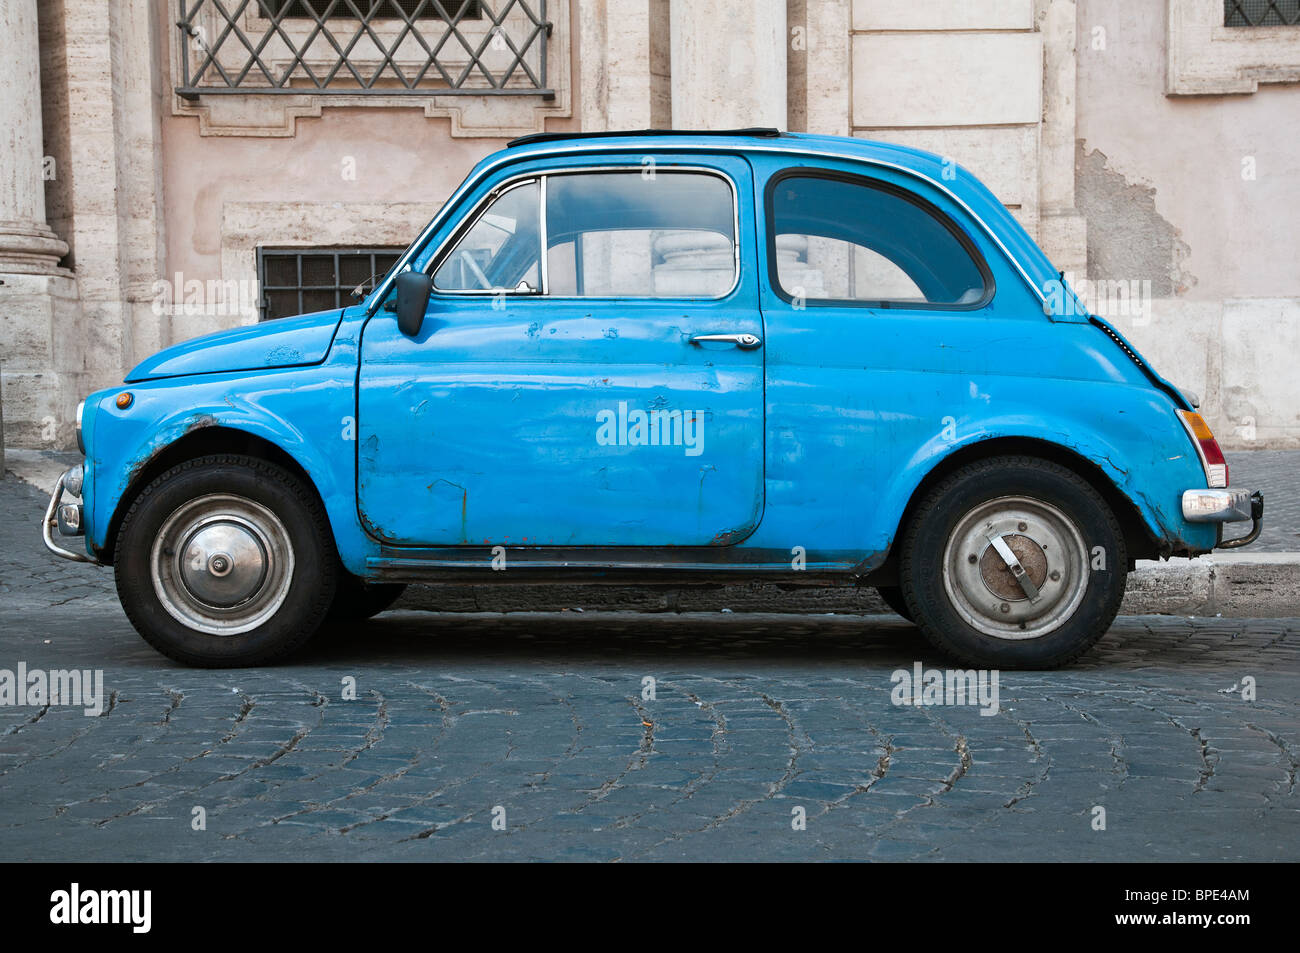 Old blue Fiat 500 car, Piazza Navona, Rome, Italy Stock Photo